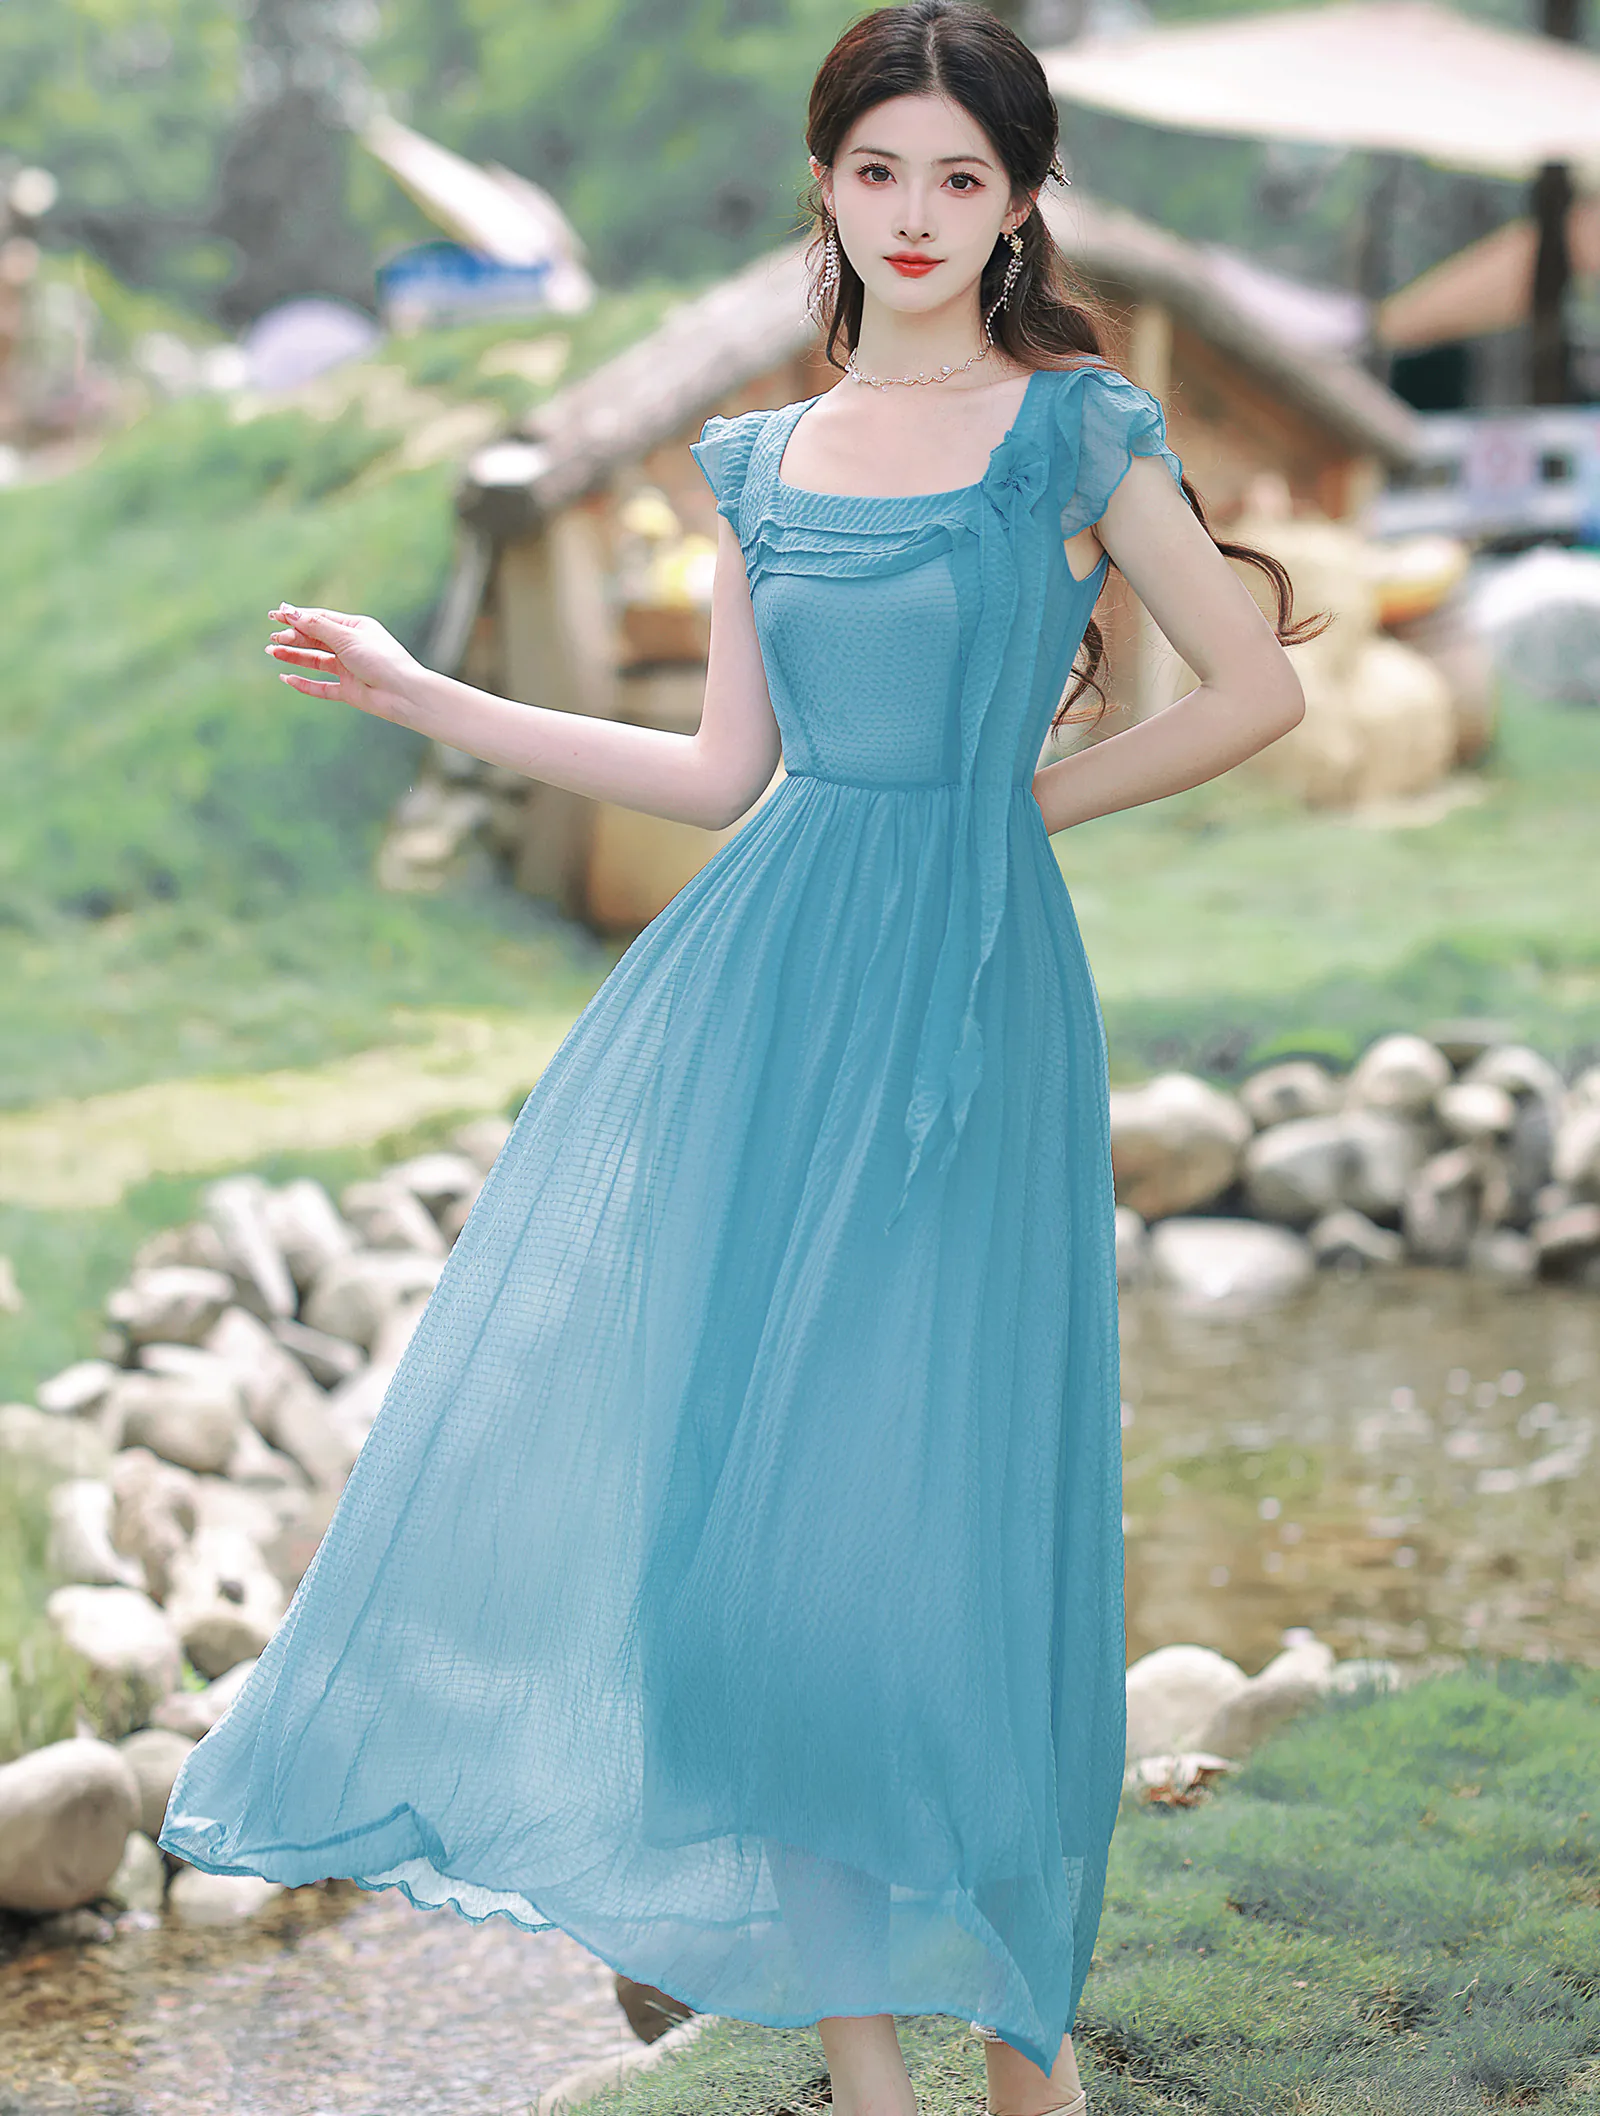 Charming Soft Blue Square Neck Summer Beach Casual Long Dress01